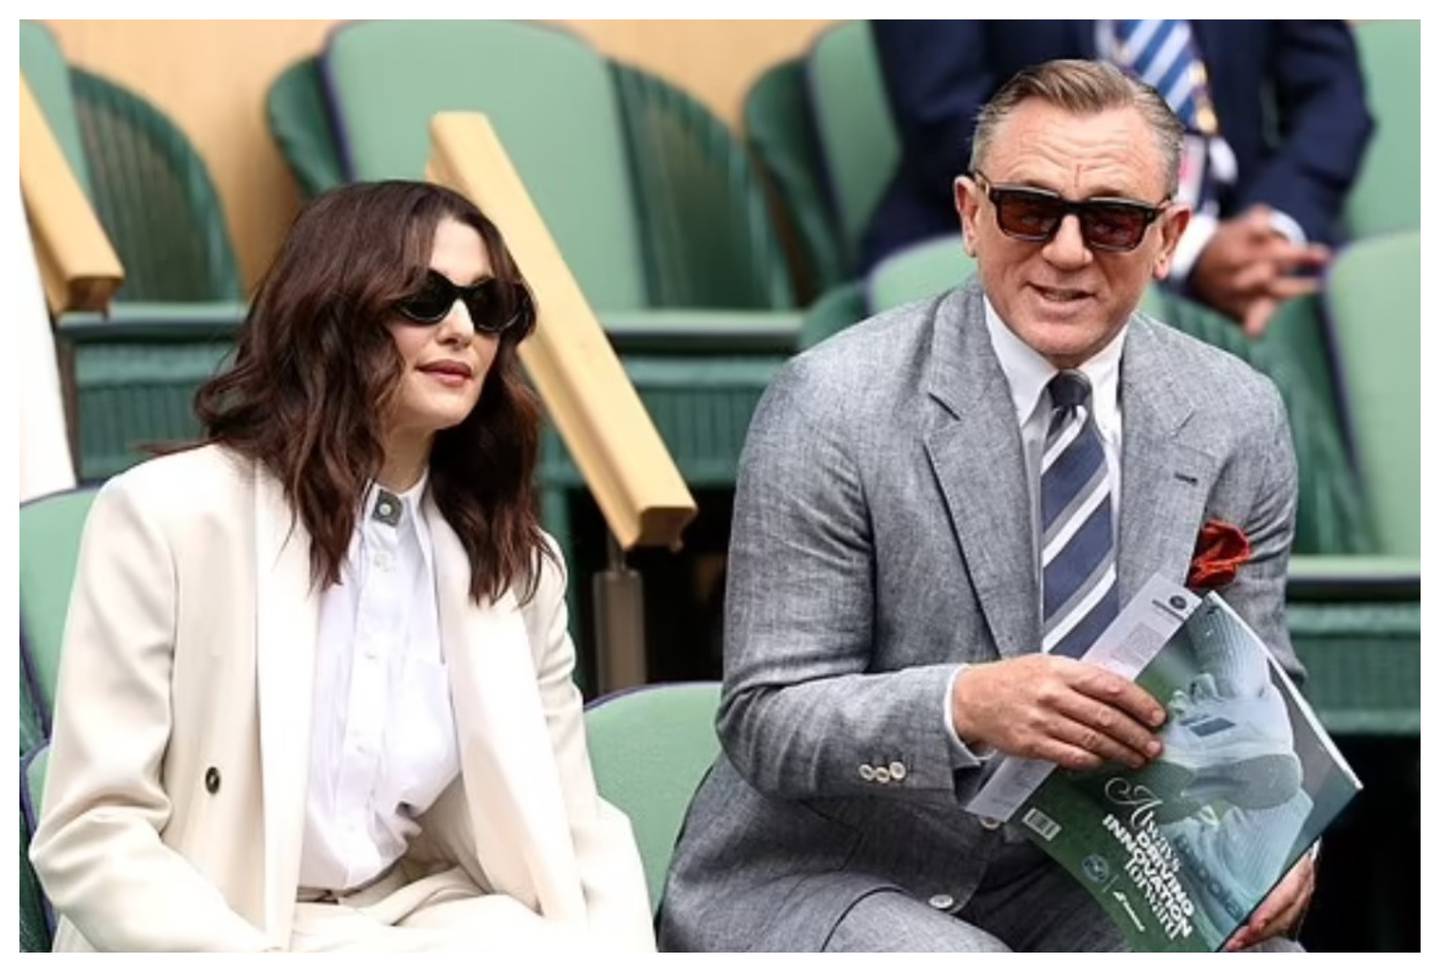 El ex james Bond, Daniel Craig, estuvo con su esposa en Wimbledon.